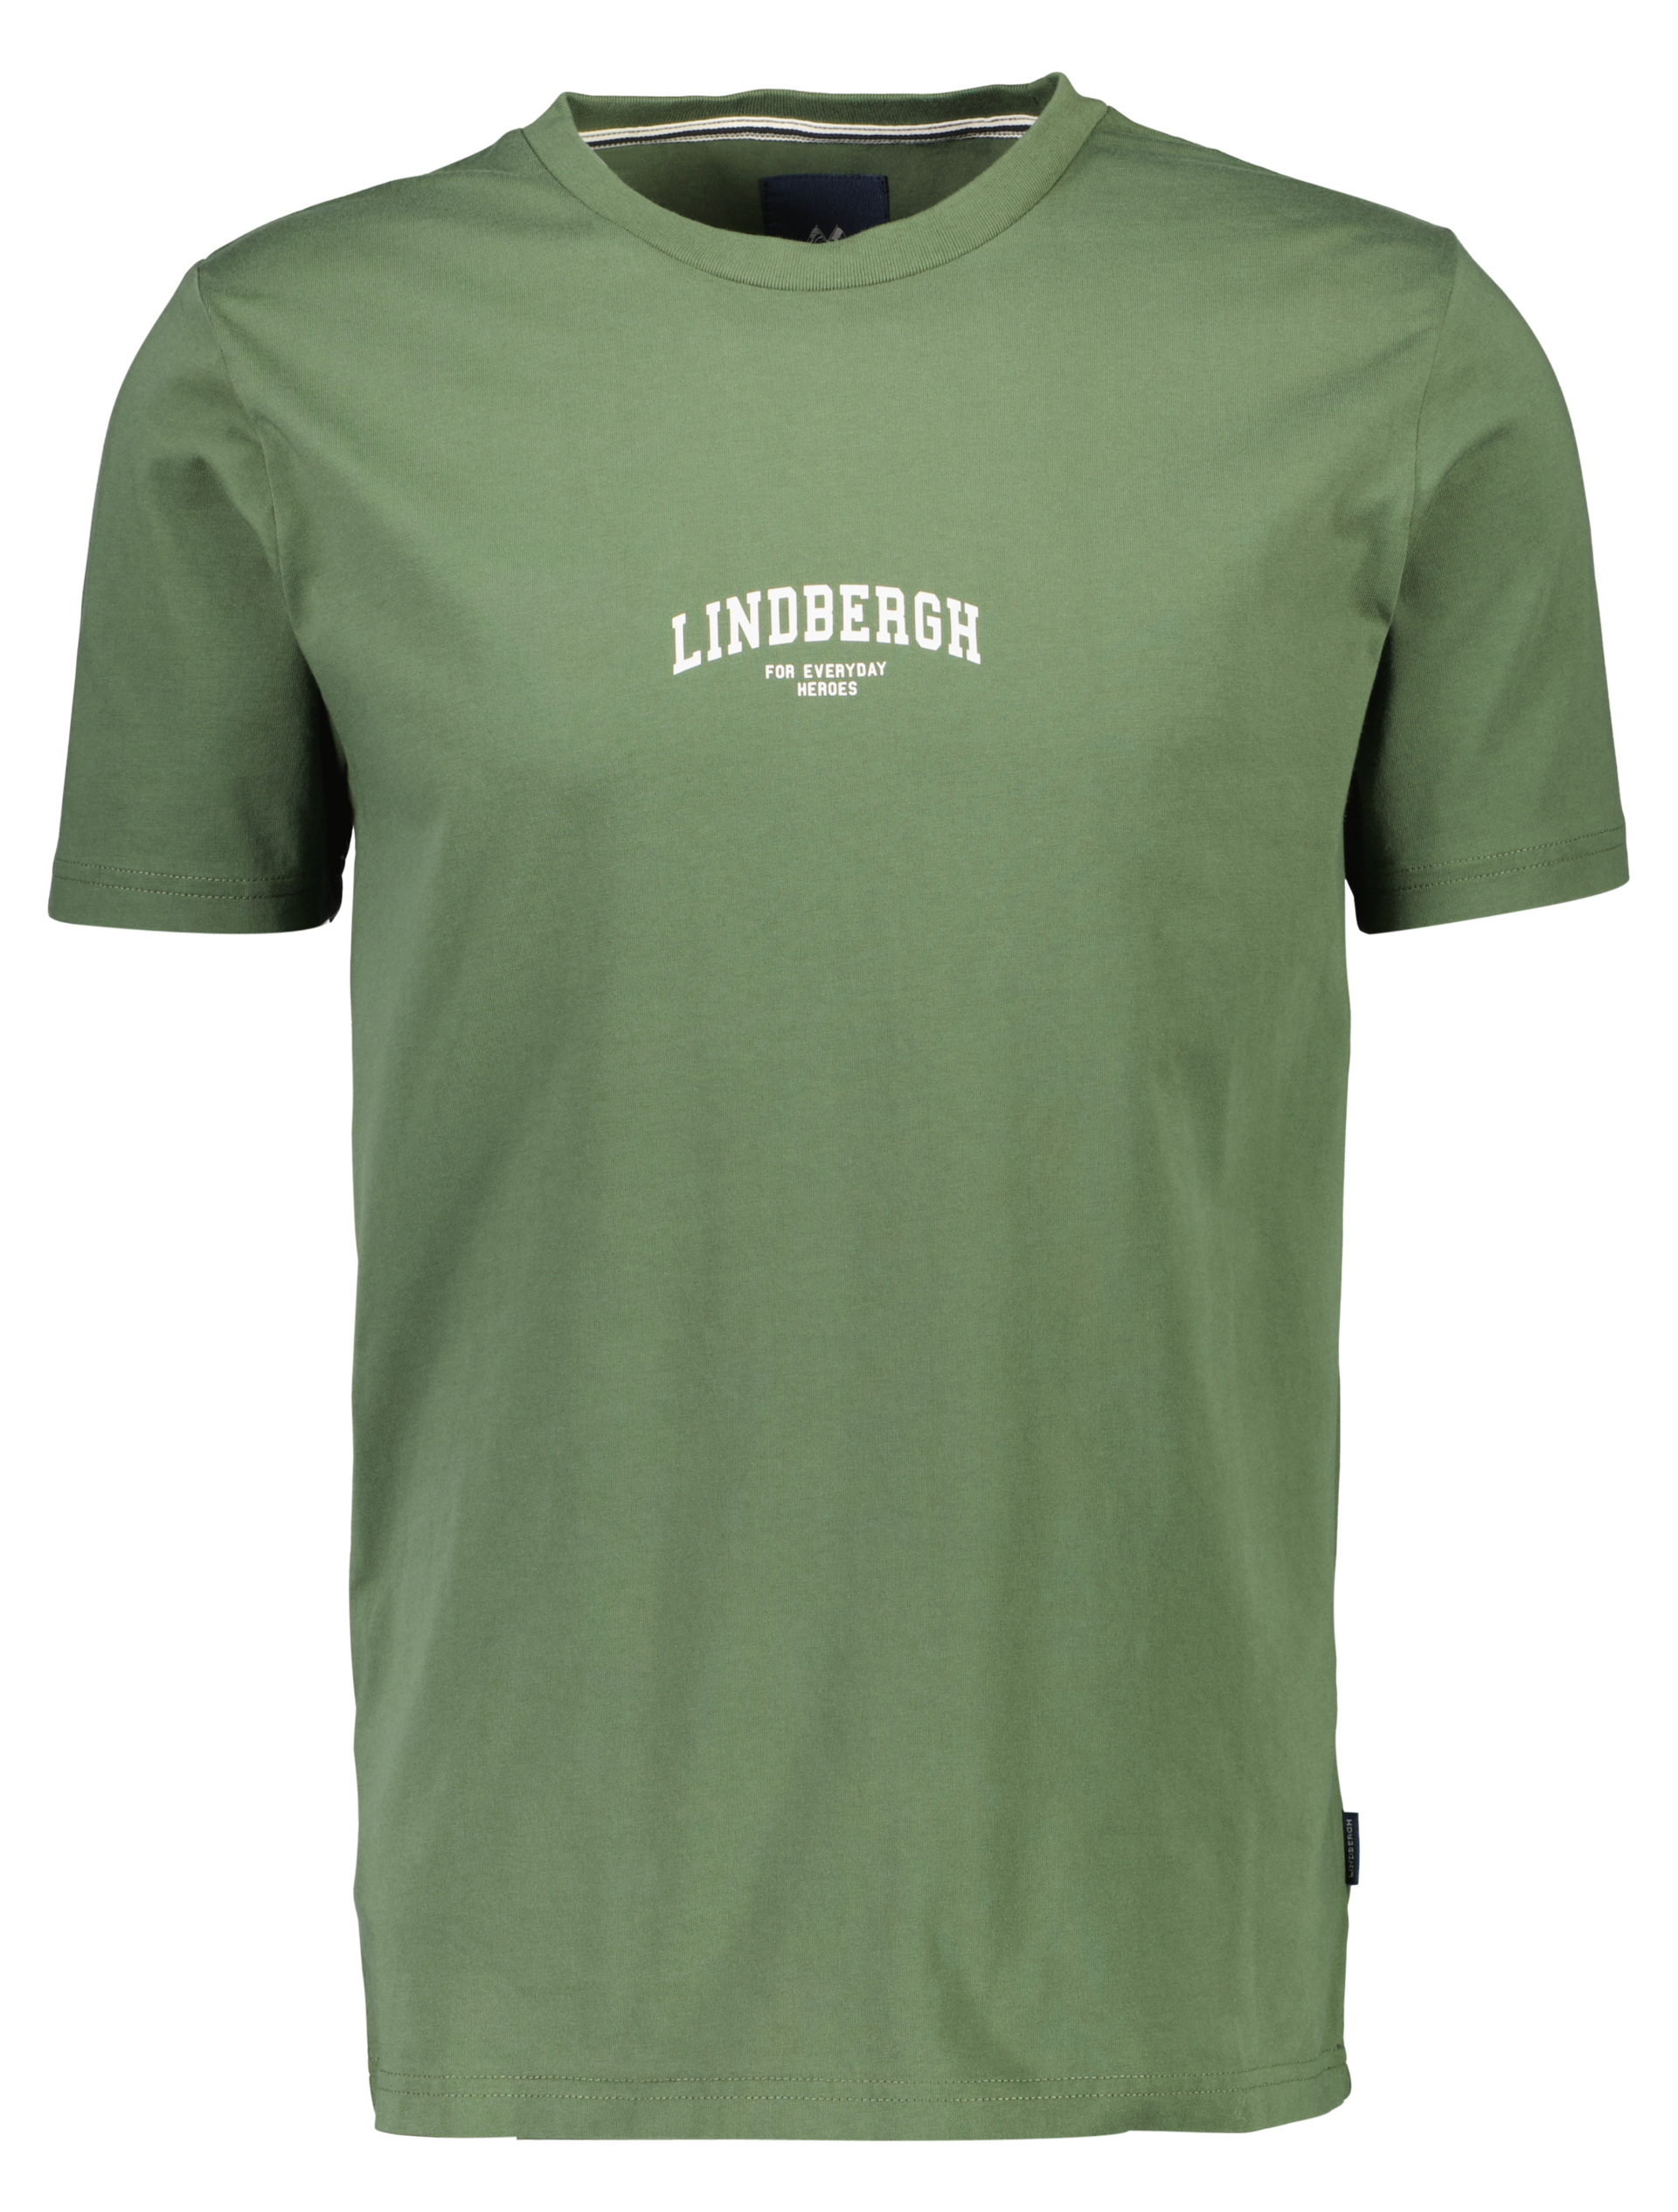 Lindbergh Tee green / green